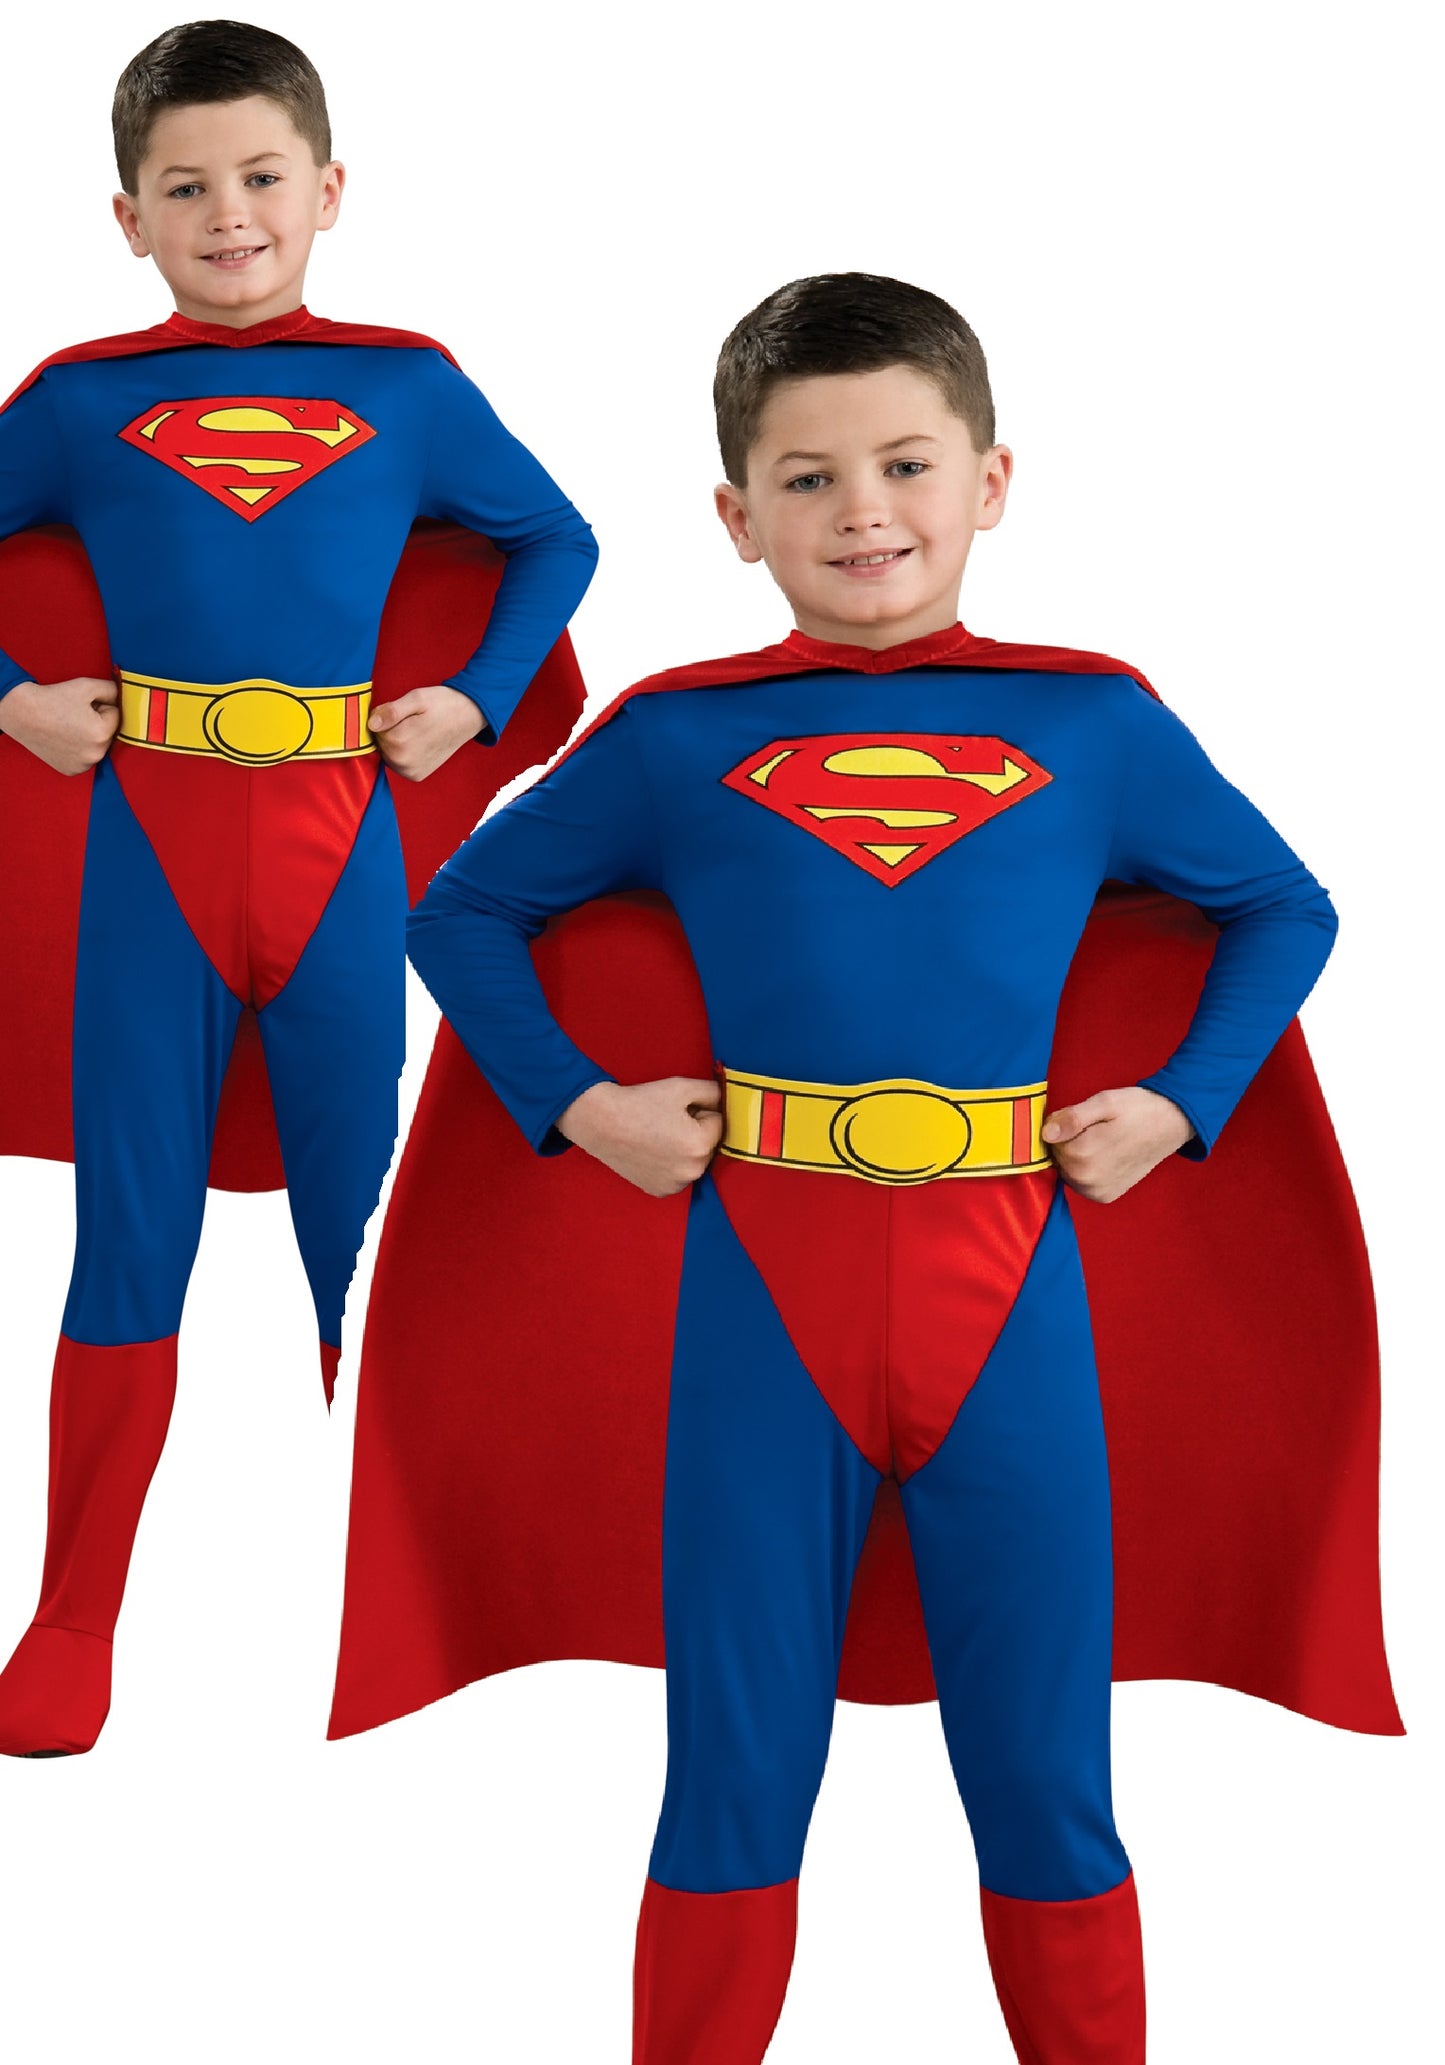 Superman Boys Costume